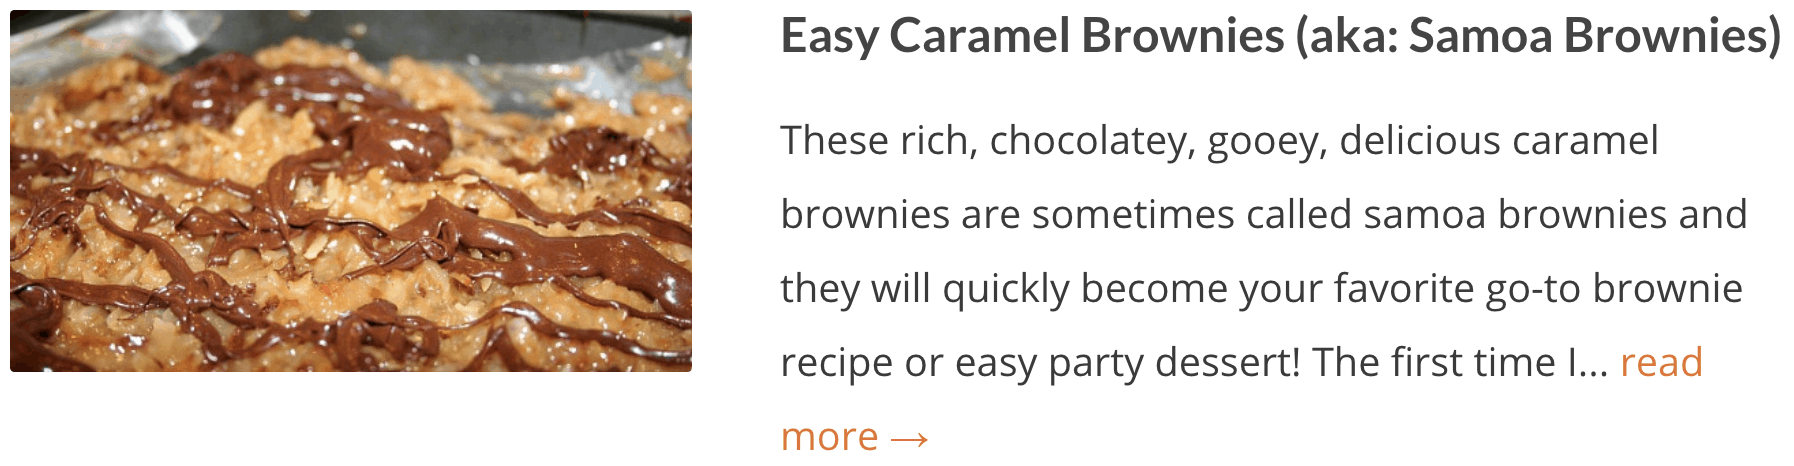 Easy Caramel Brownies (aka: Samoa Brownies)